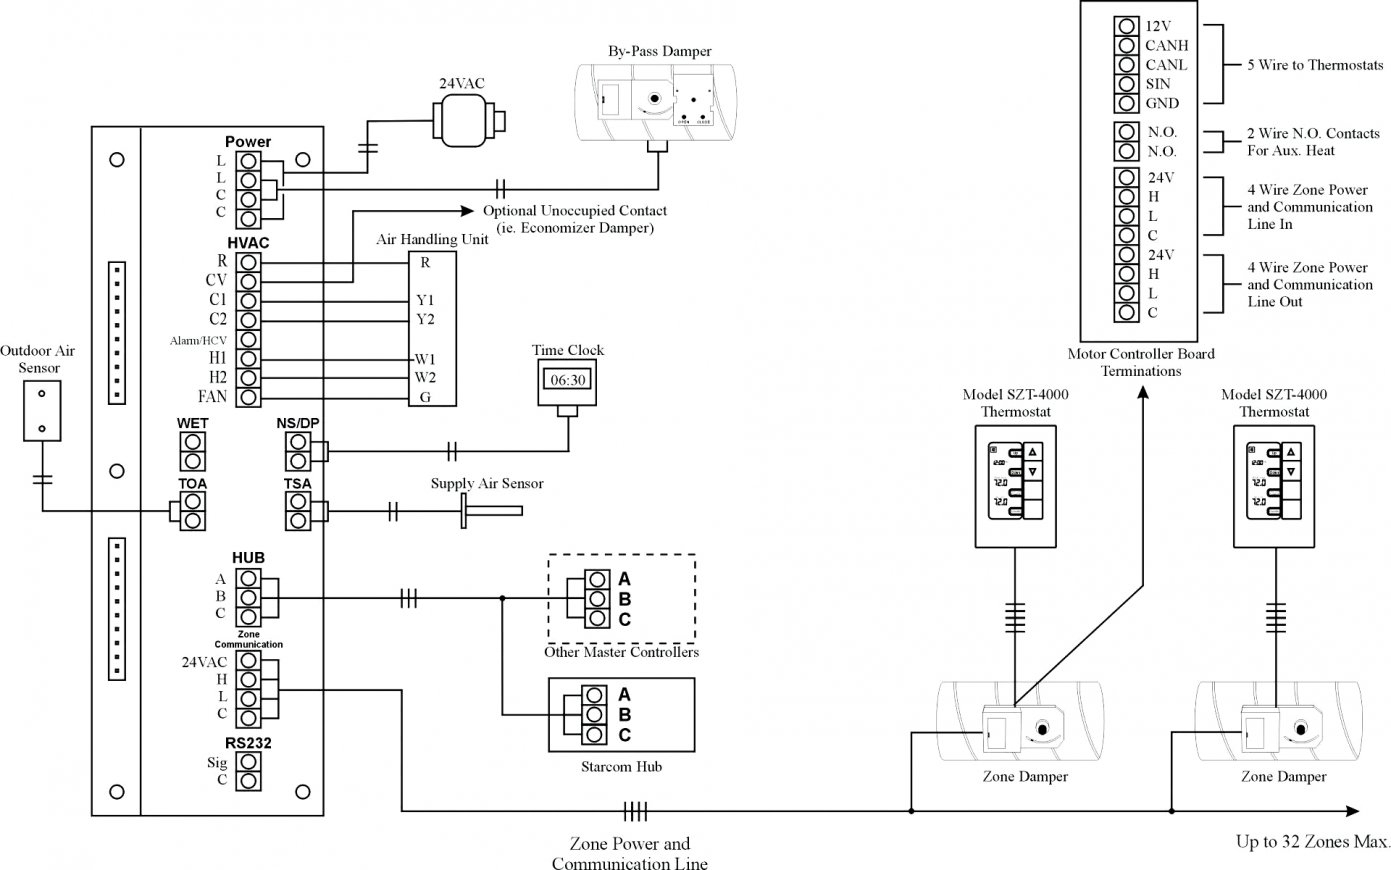 Wiring 3 Wire Smoke Detectors | Wiring Diagram - 2 Wire Smoke Detector Wiring Diagram